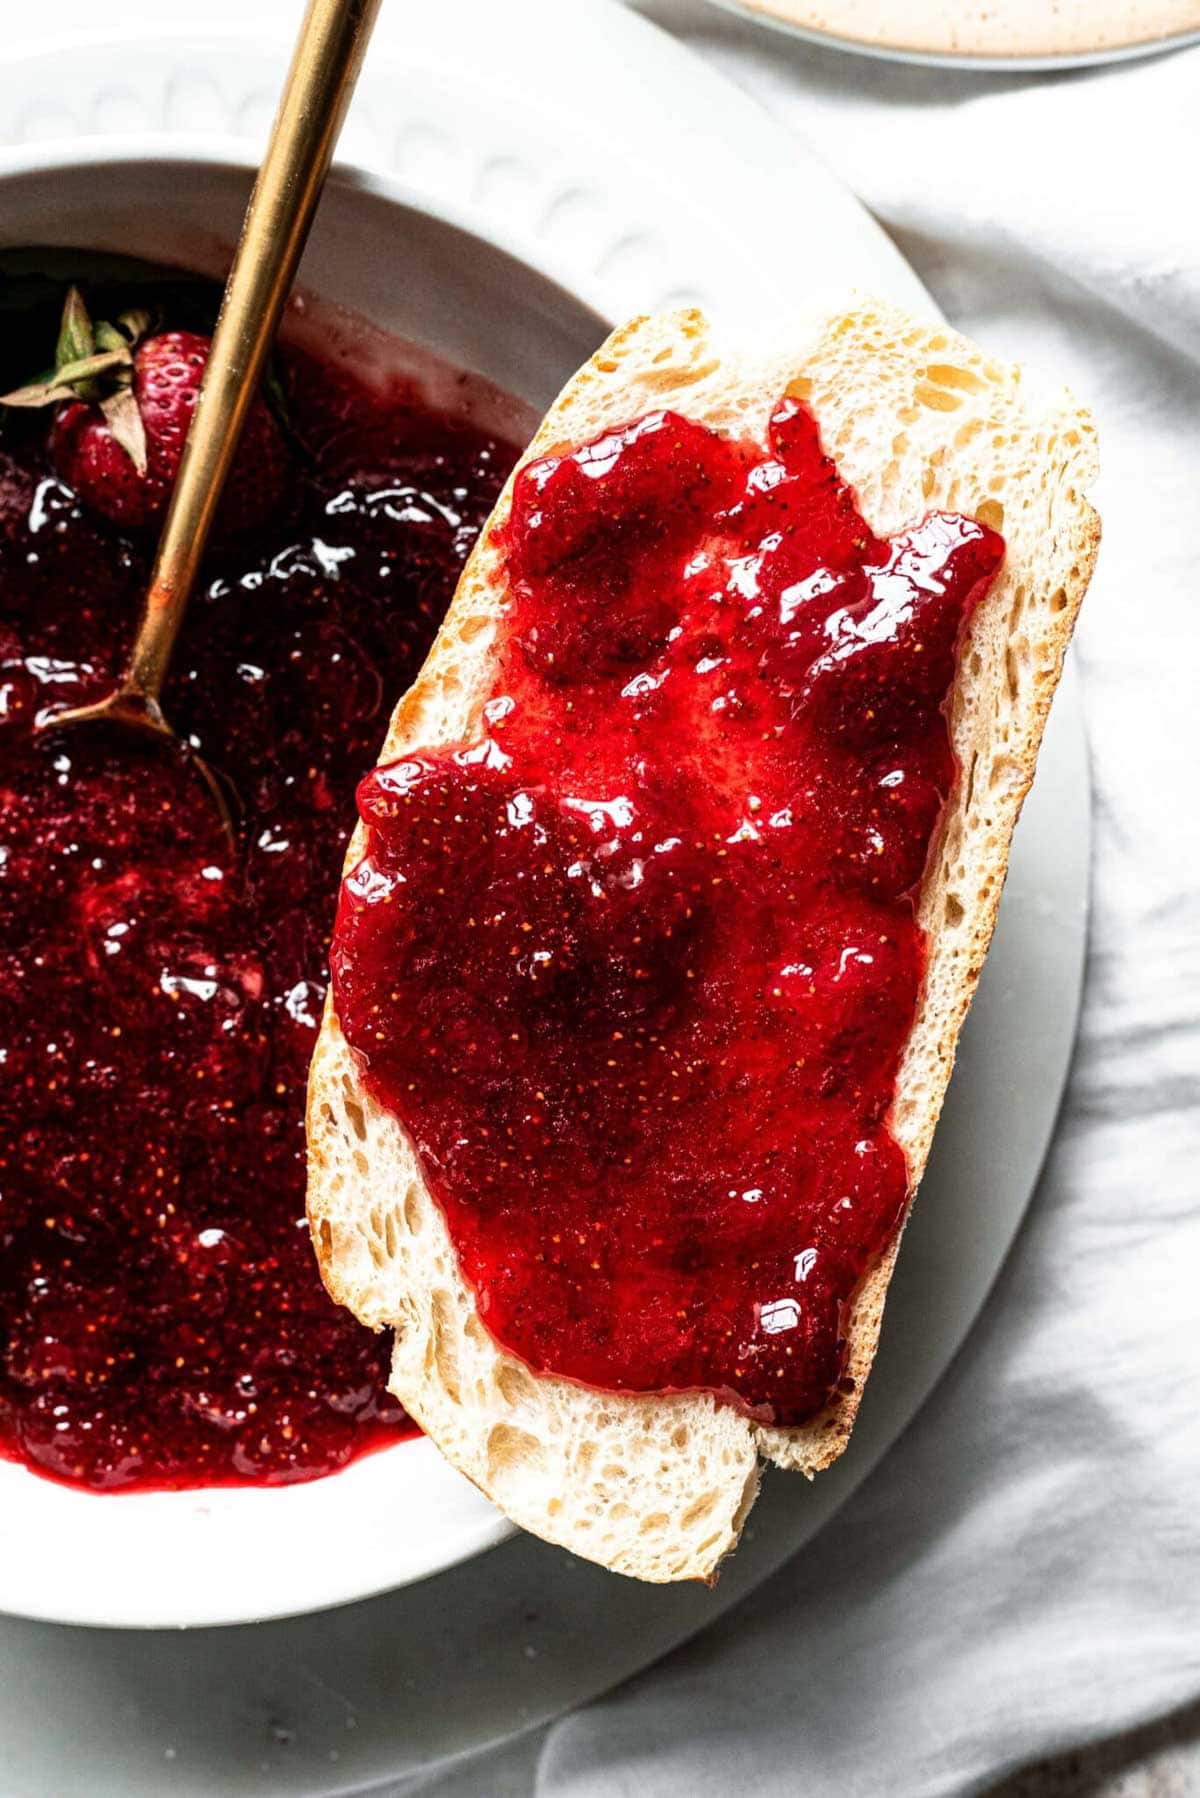 Bourbon strawberry jam on a piece of toast.